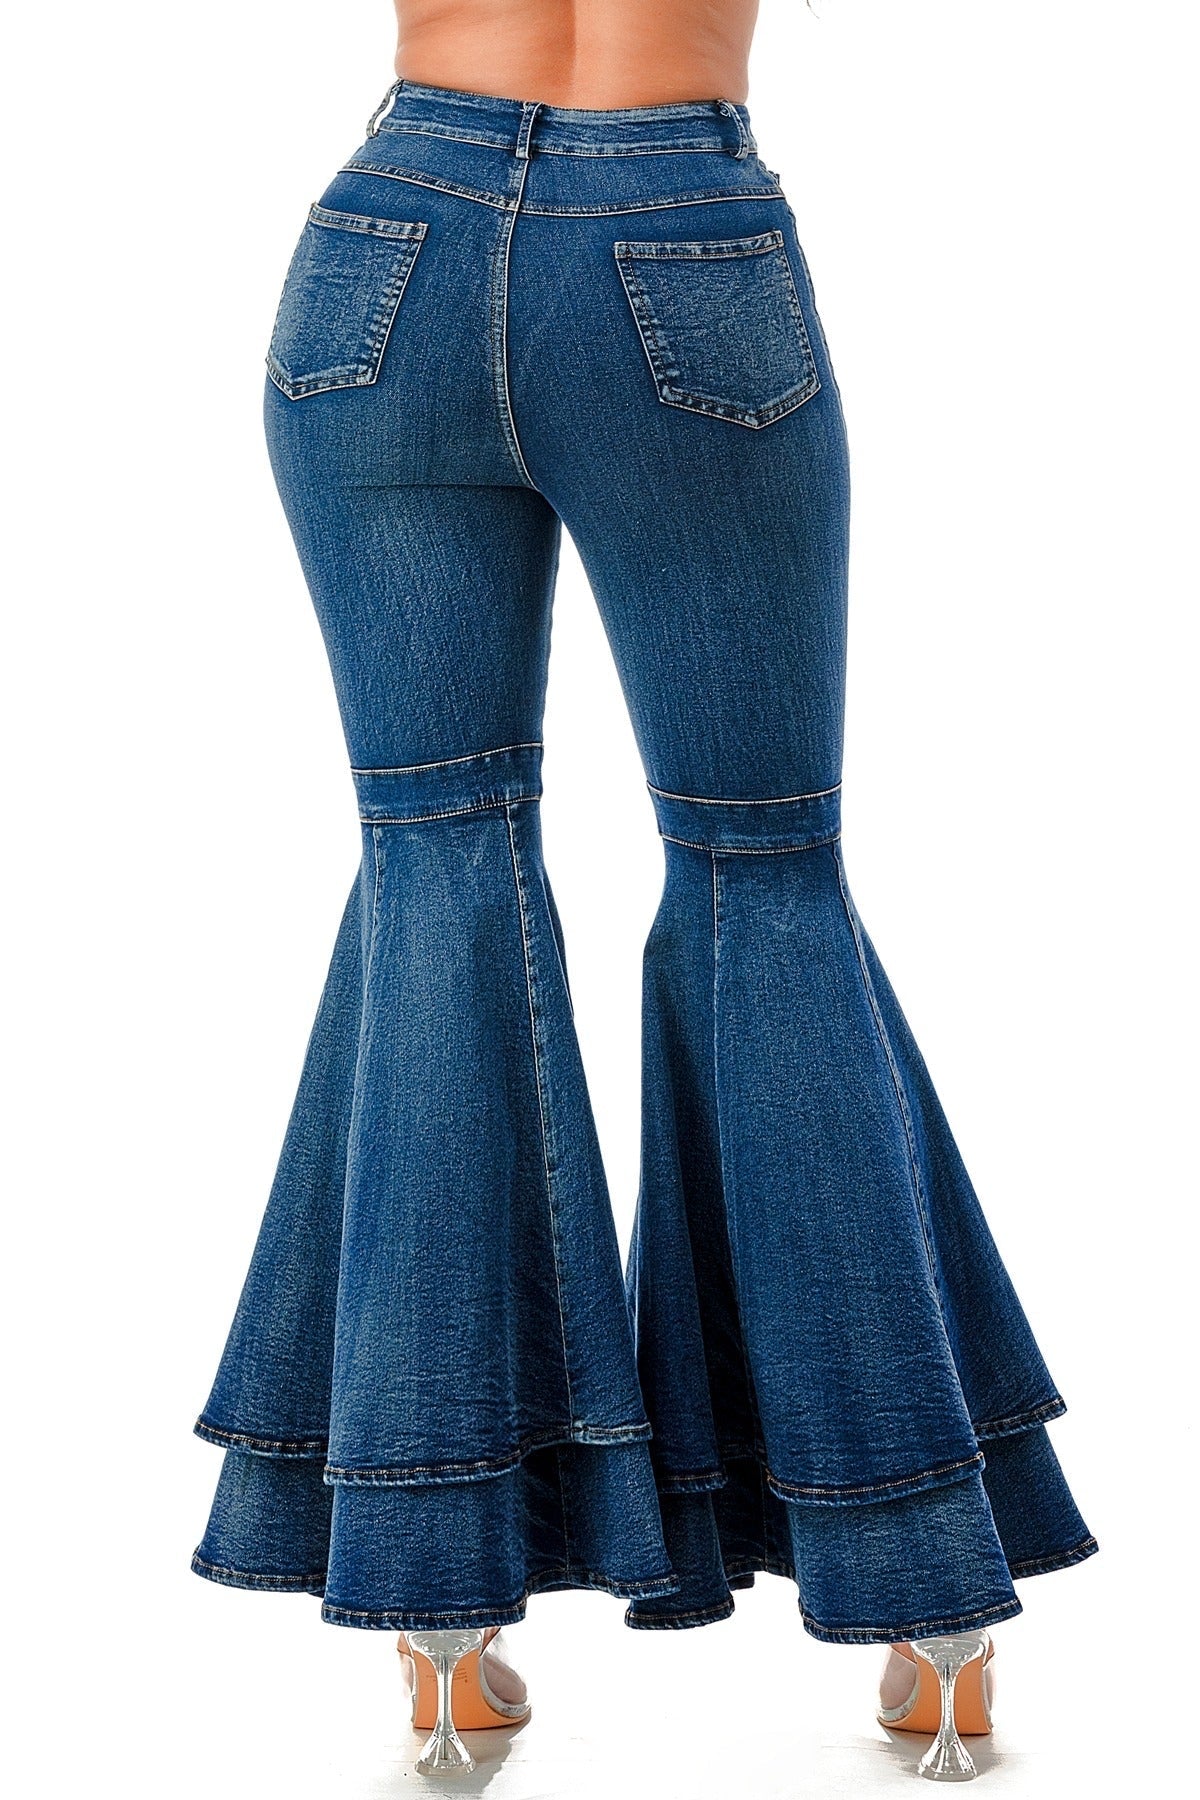 NEW Stylish Women's Ripped Patchwork Skinny Club Bell-Bottom Jeans Denim  Pants | eBay